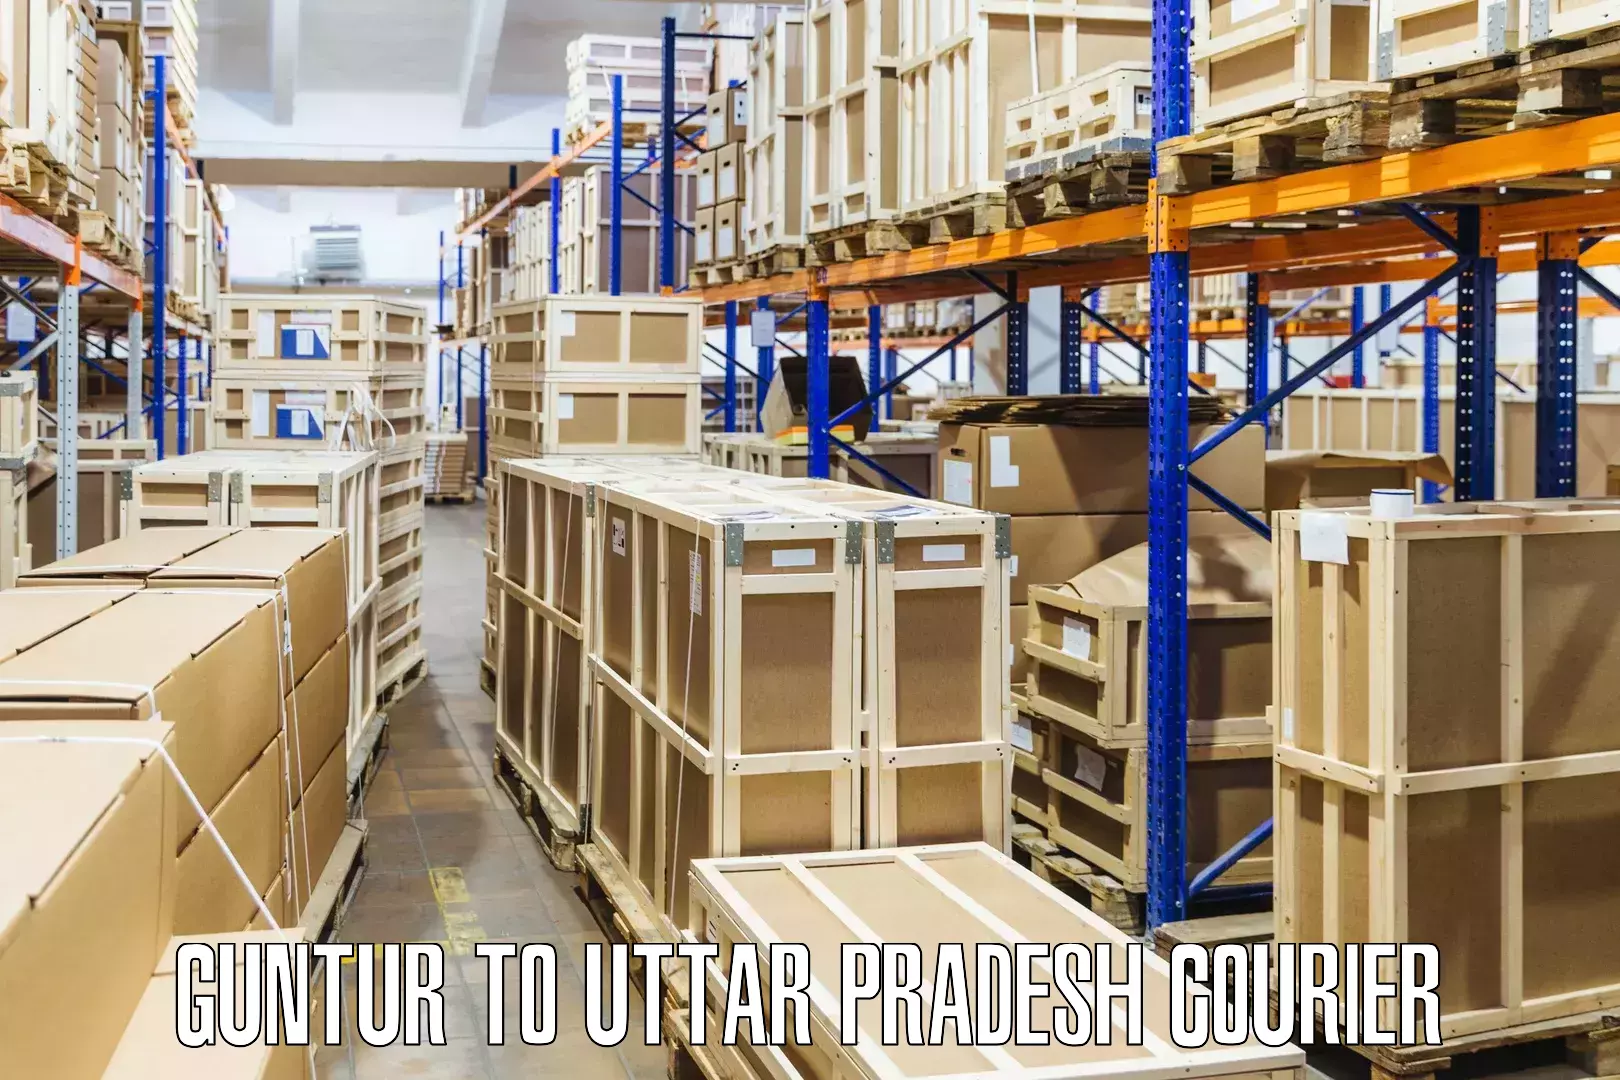 User-friendly courier app Guntur to Uttar Pradesh